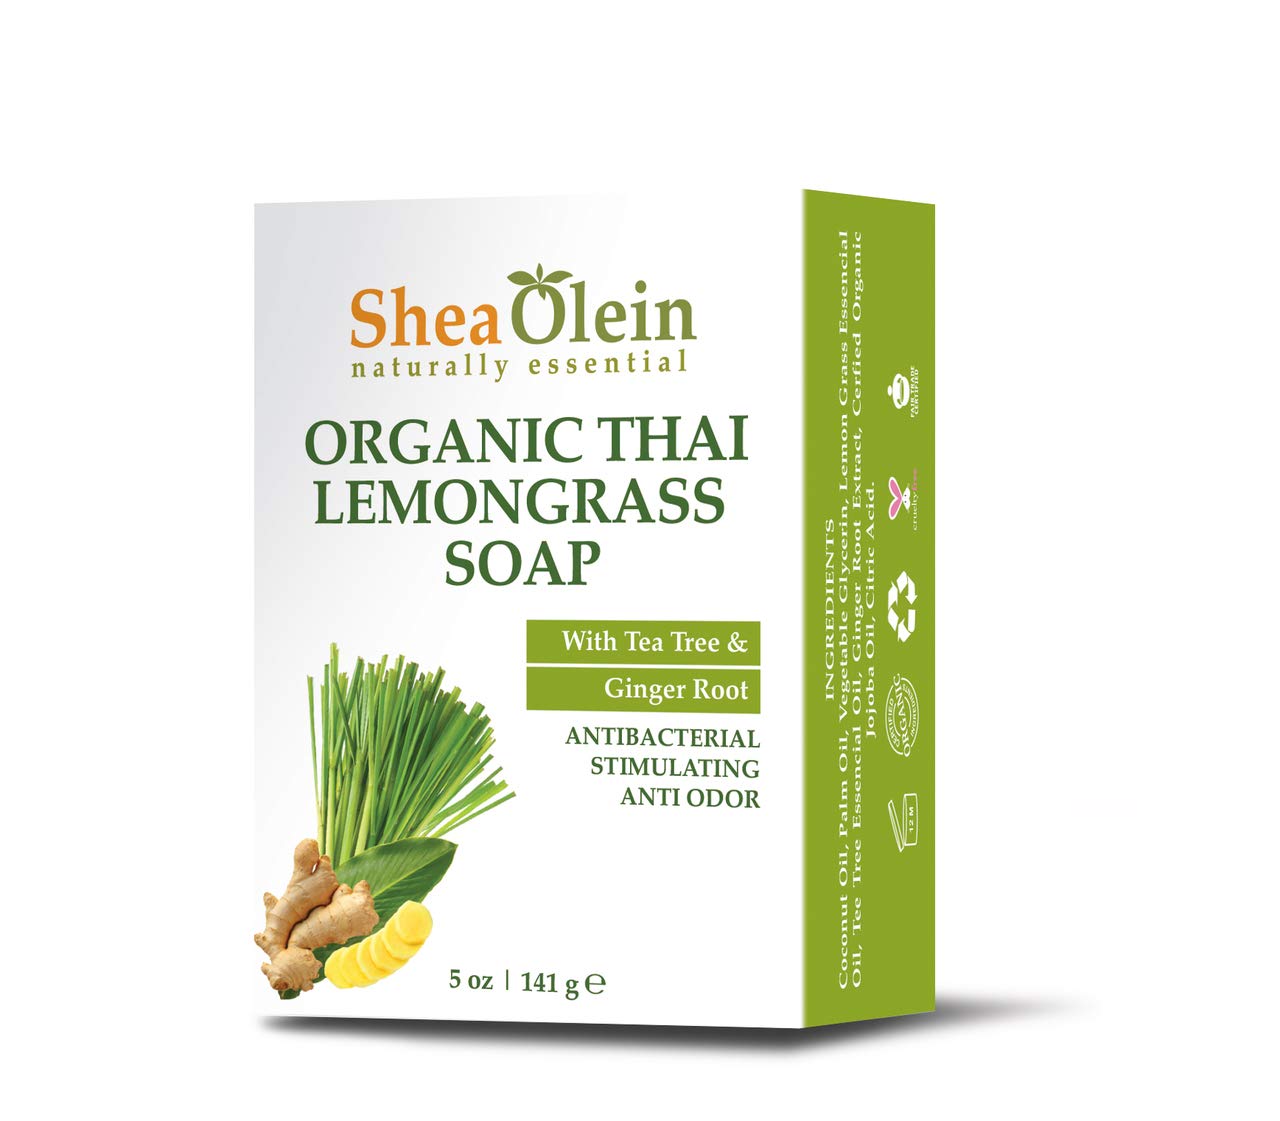 Organic Thai Lemongrass Soap with Tea Tree & Ginger Root, Anti-Inflammatory Soap – 5 Oz (141g)